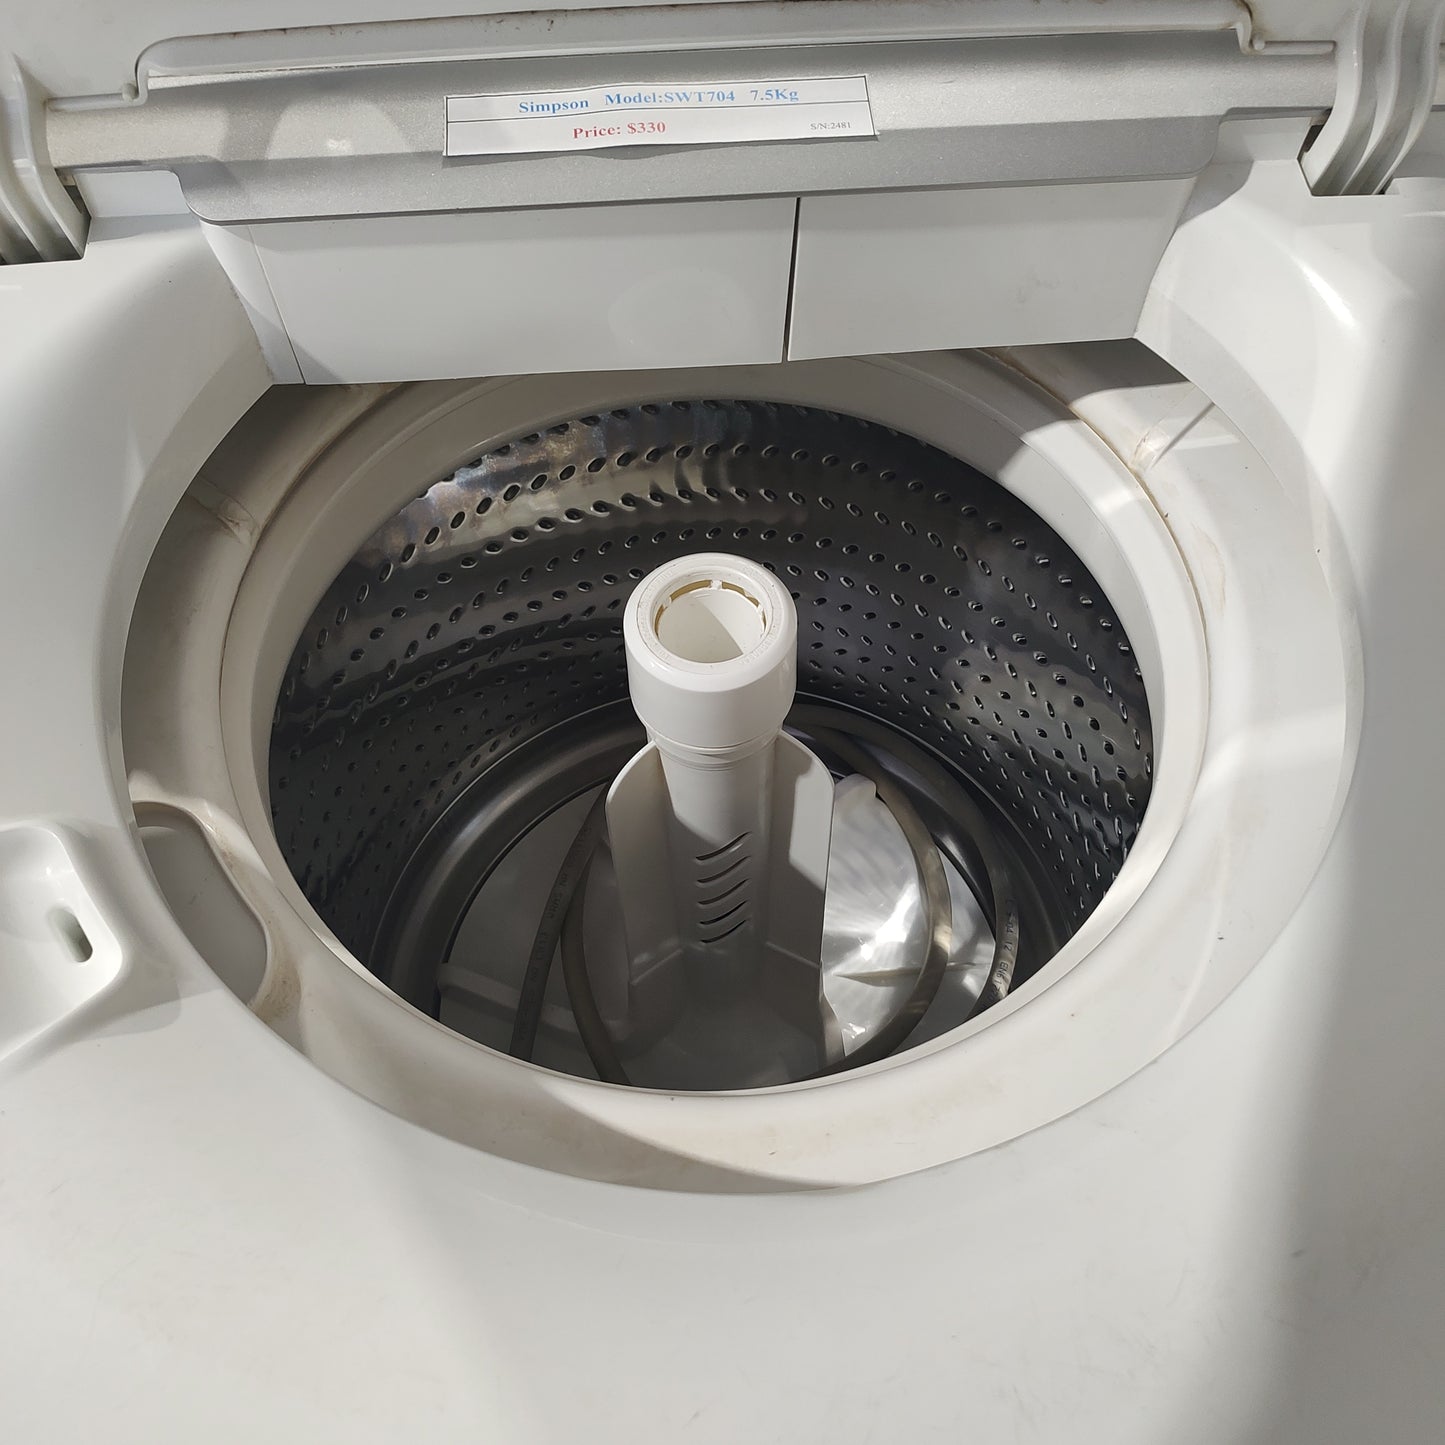 7.5kg Top Load Simpson Washing Machine SWT704